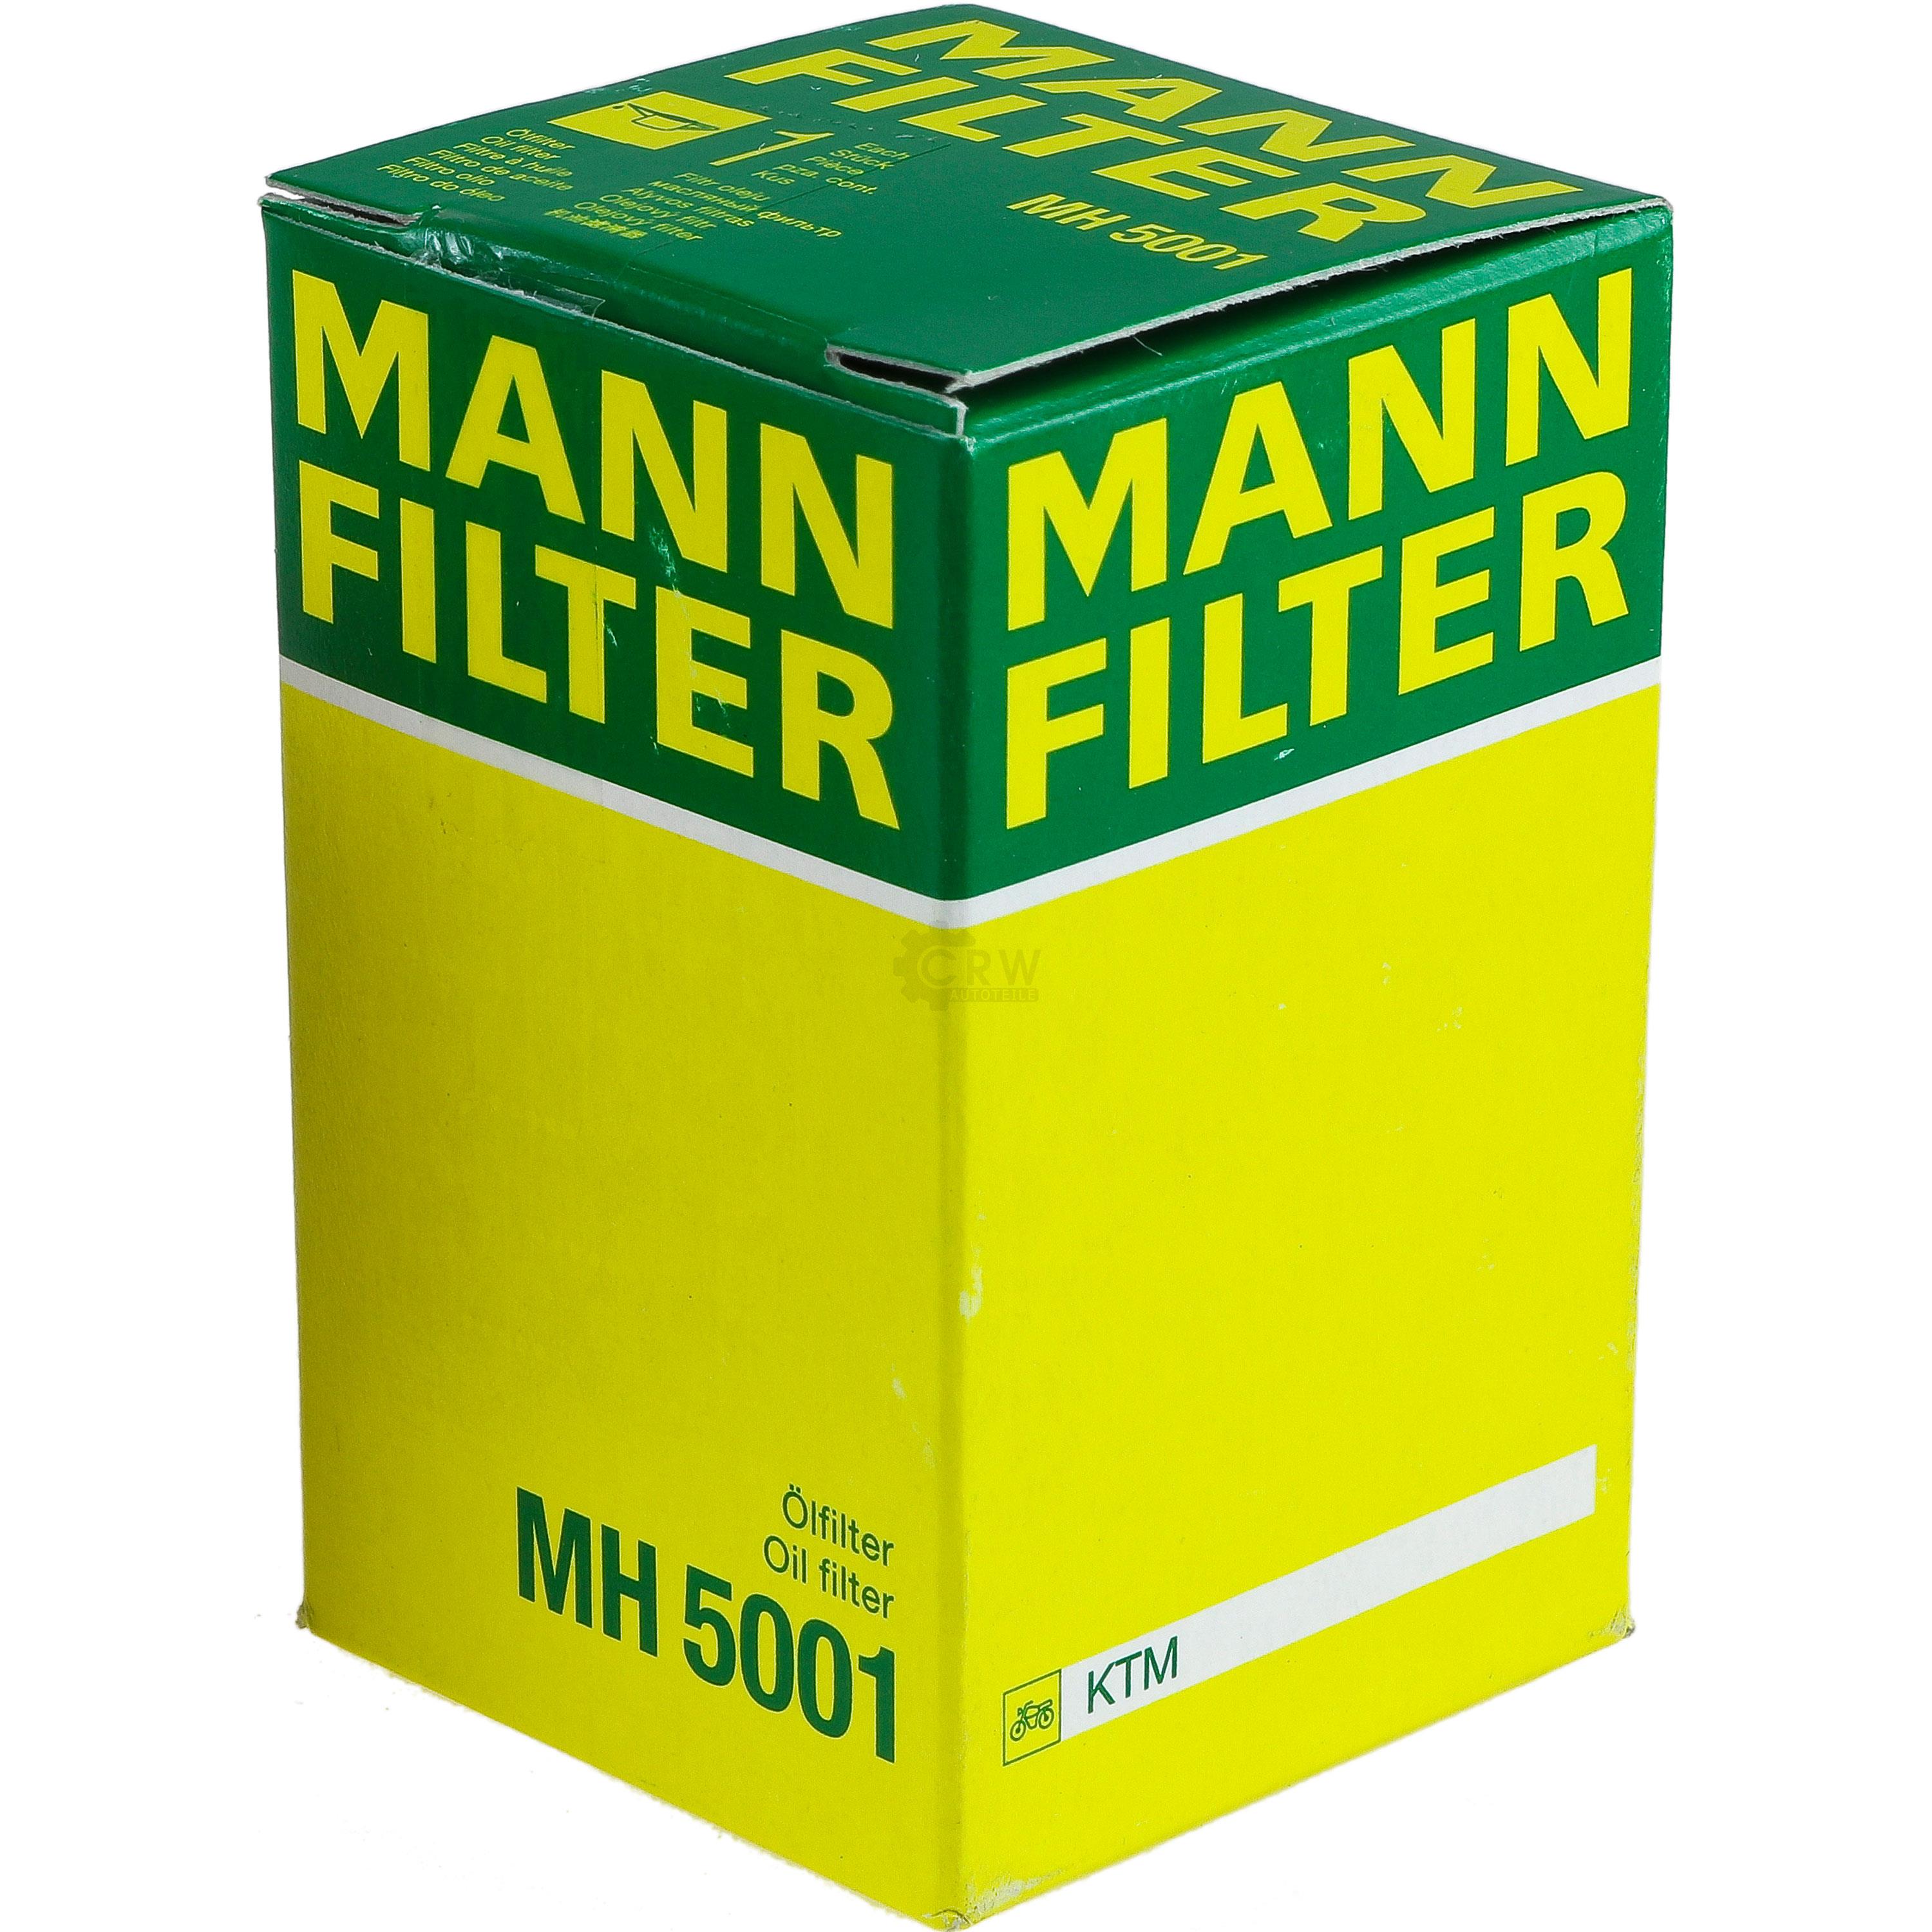 MANN-FILTER Ölfilter MH 5001 Oil Filter